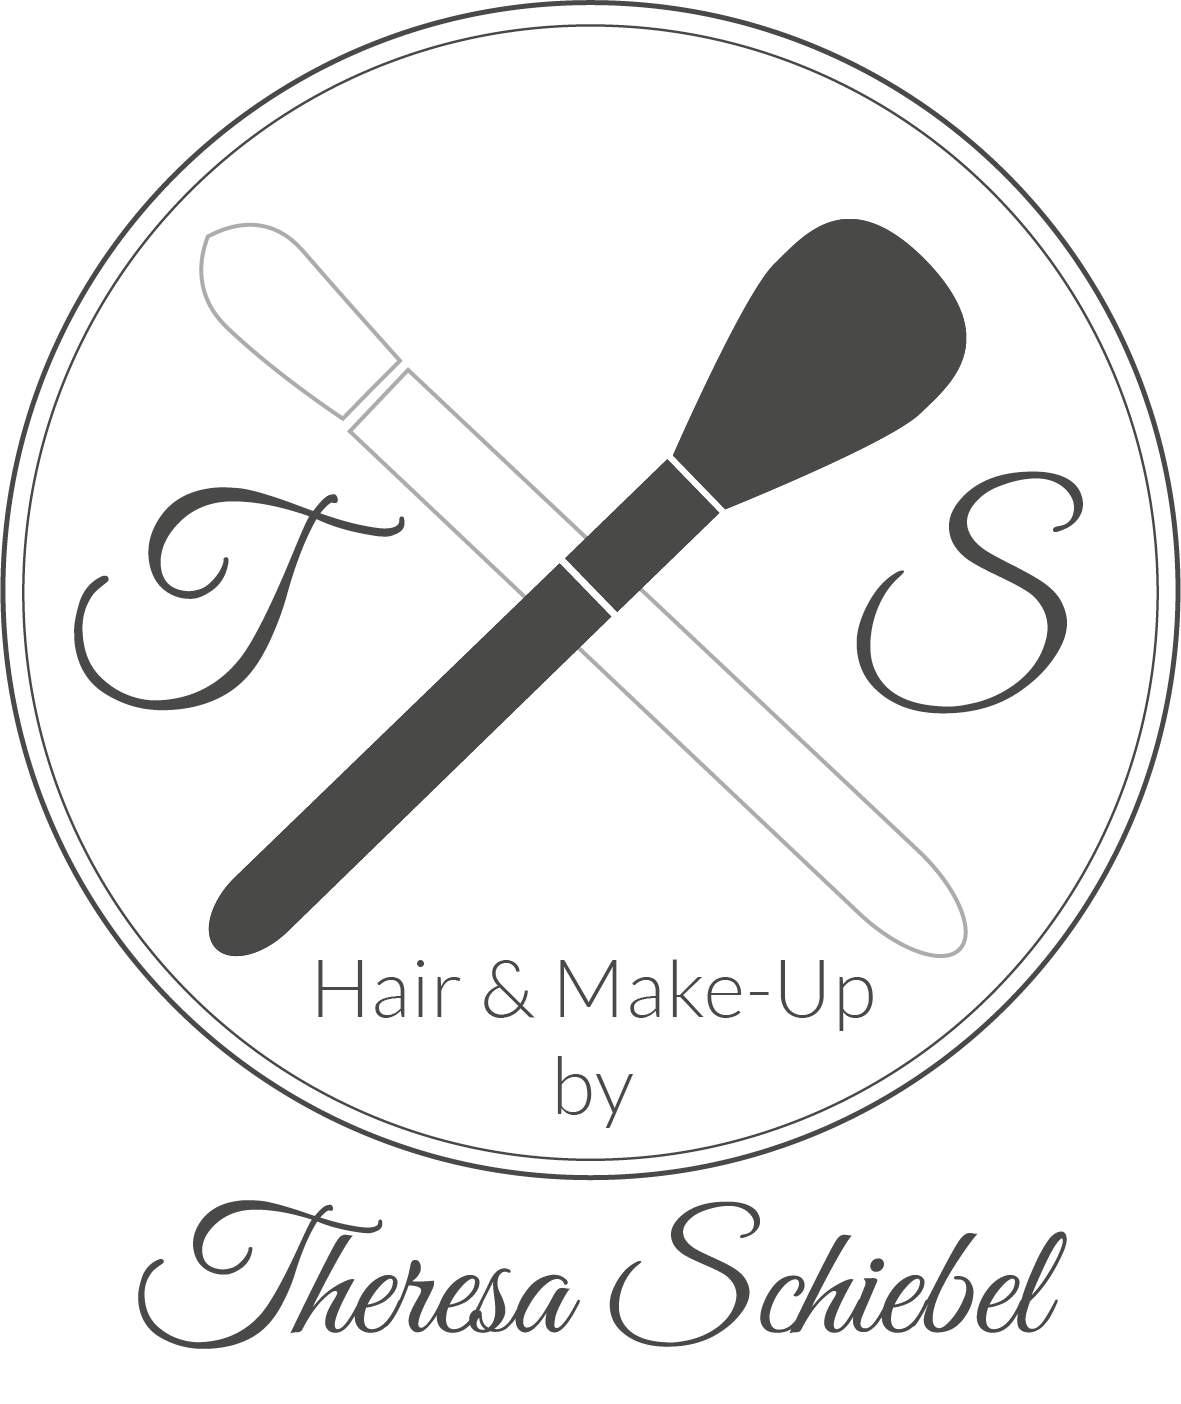 Hair & Make-up Artist